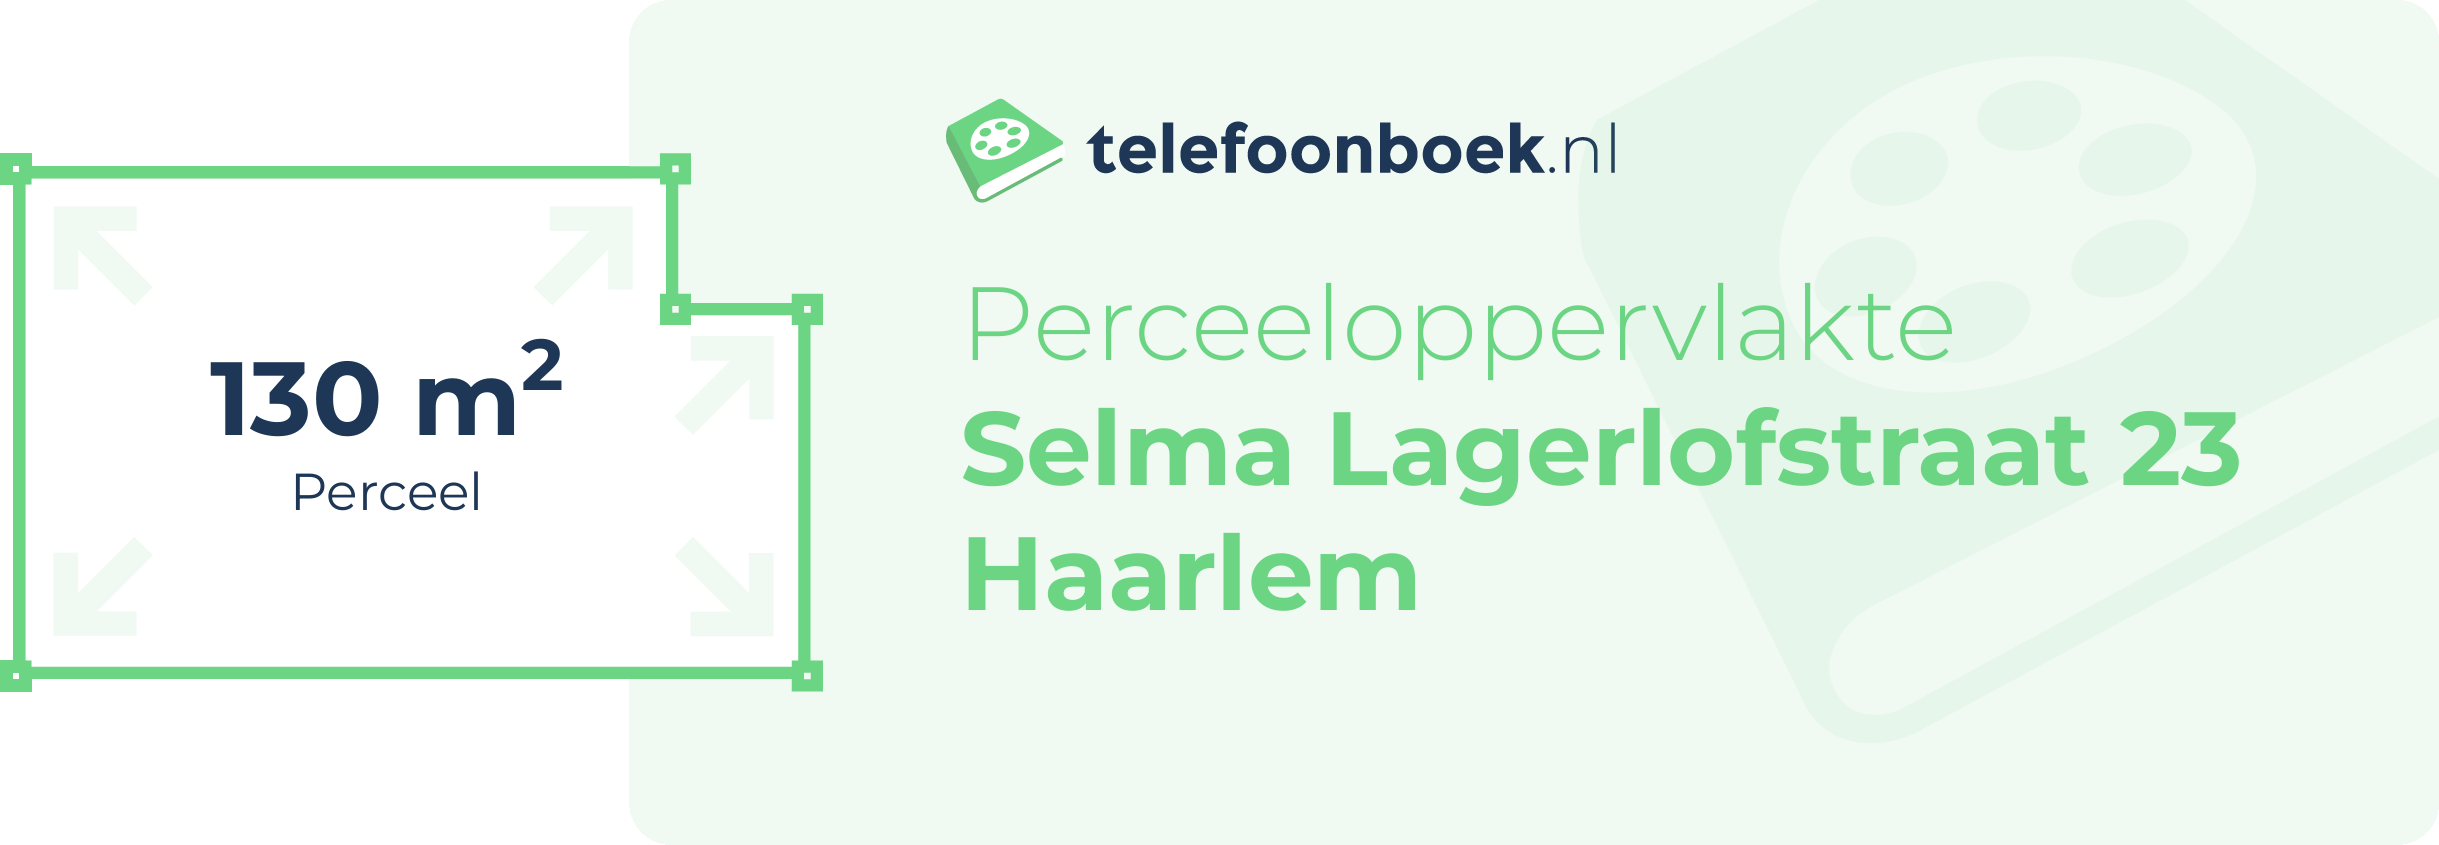 Perceeloppervlakte Selma Lagerlofstraat 23 Haarlem